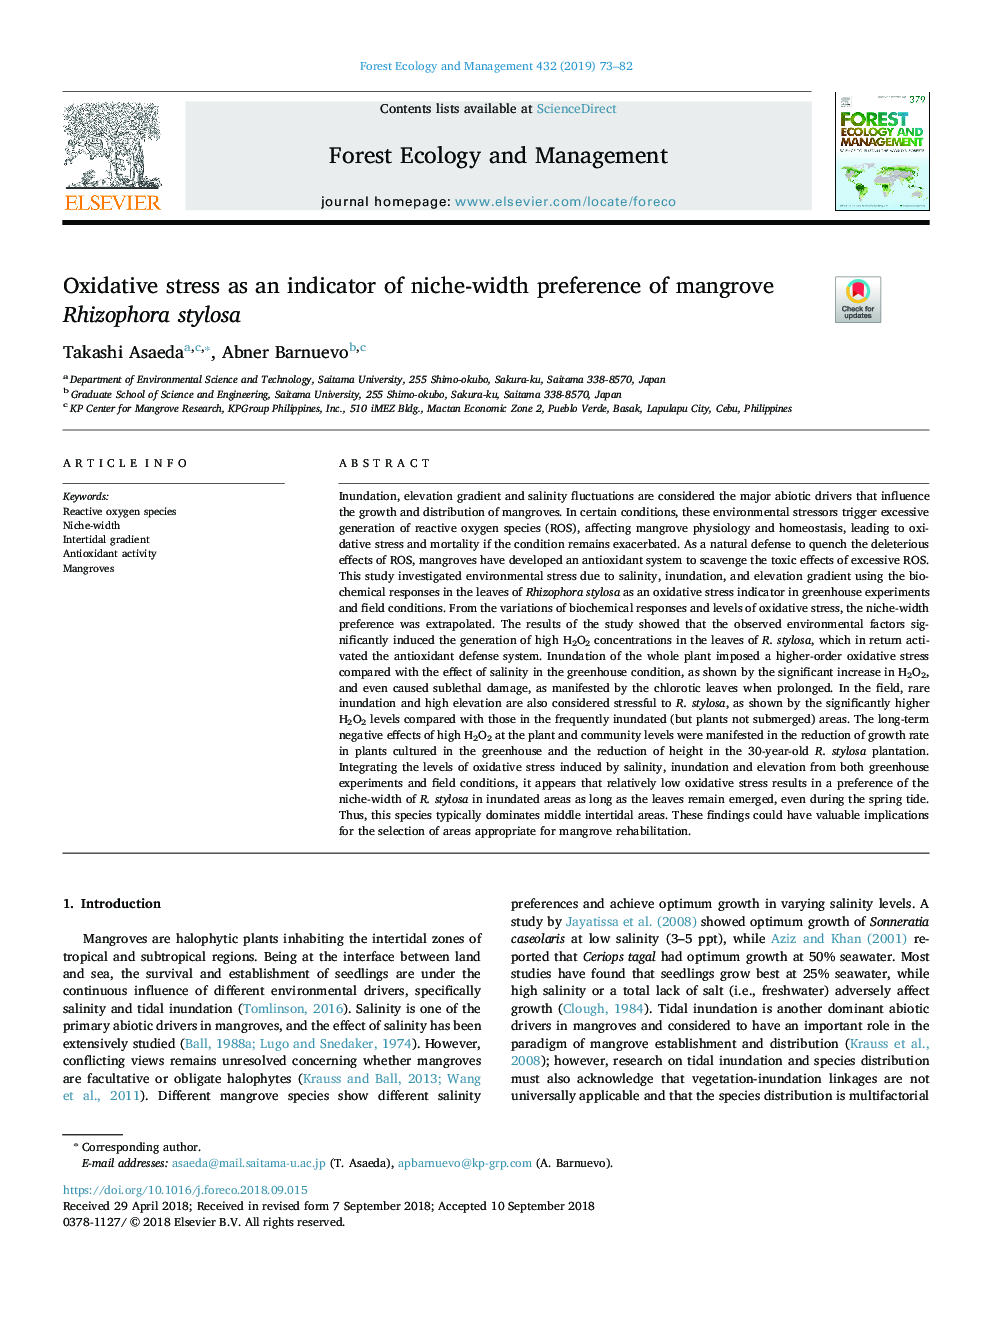 Oxidative stress as an indicator of niche-width preference of mangrove Rhizophora stylosa